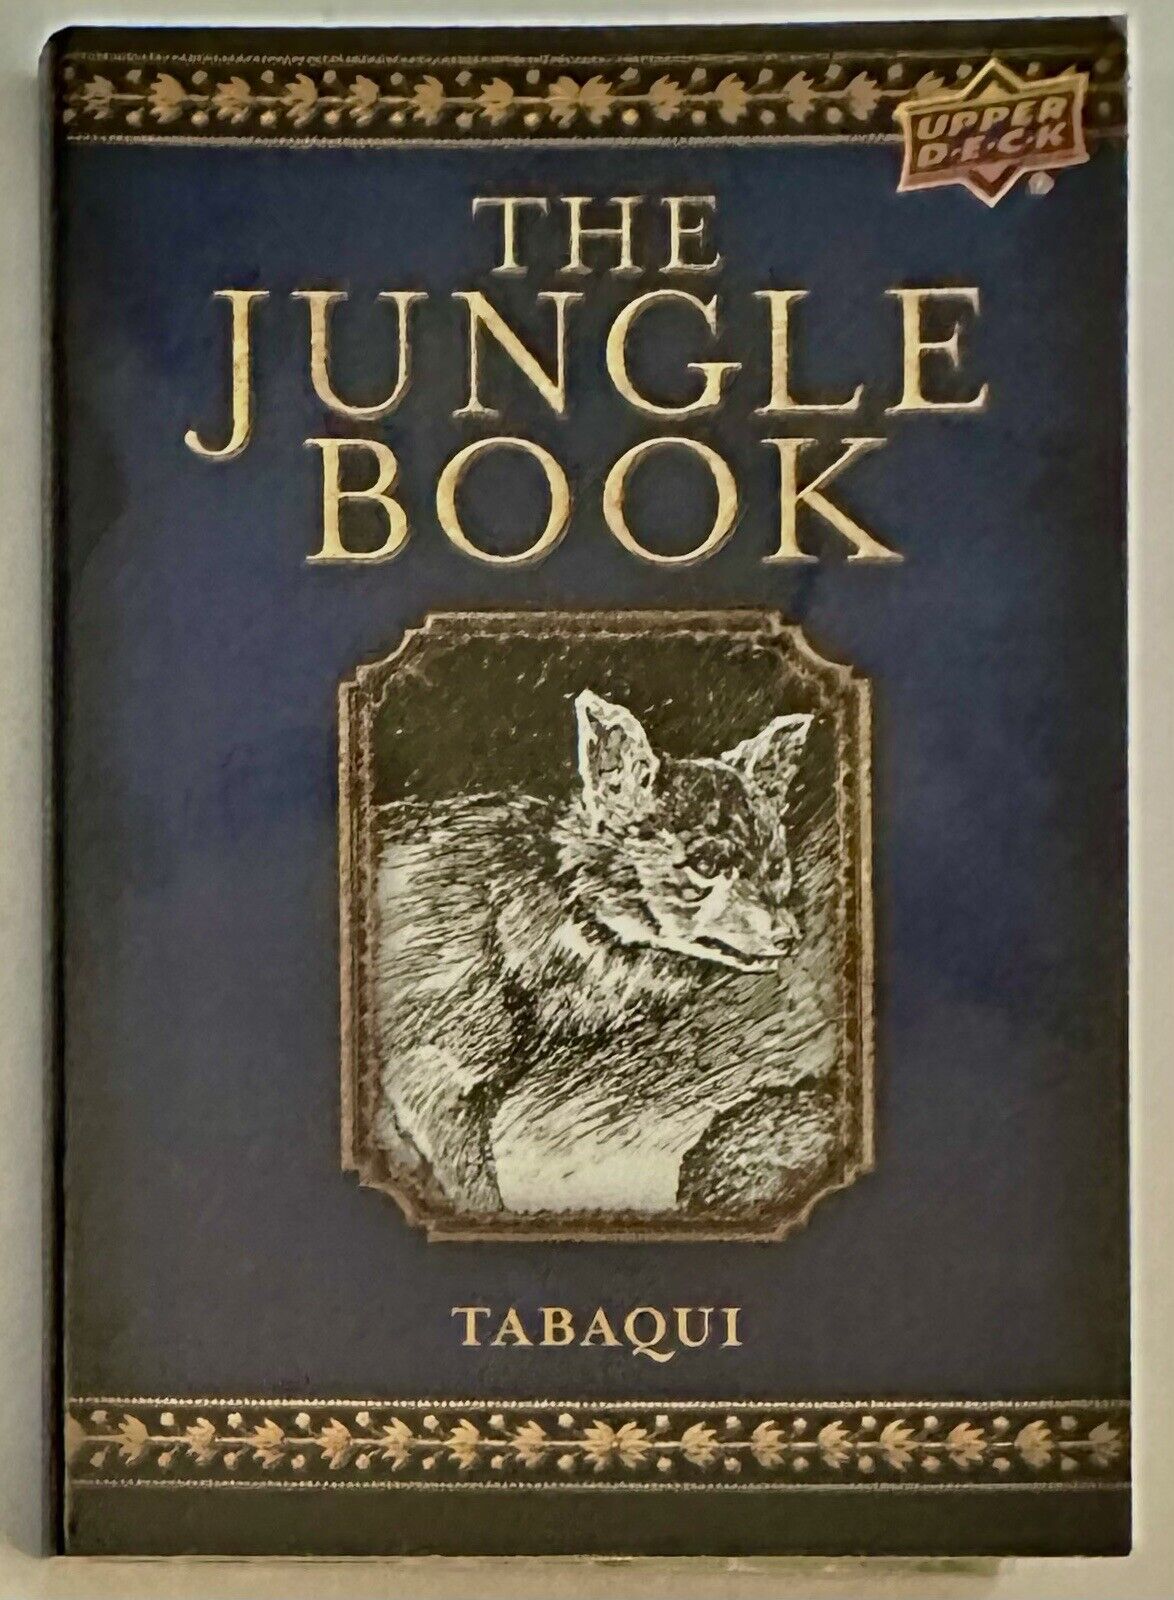 2018 Goodwin Champions “The Jungle Book” Sketch Card (Tabaqui - #JBS-6) 1/1